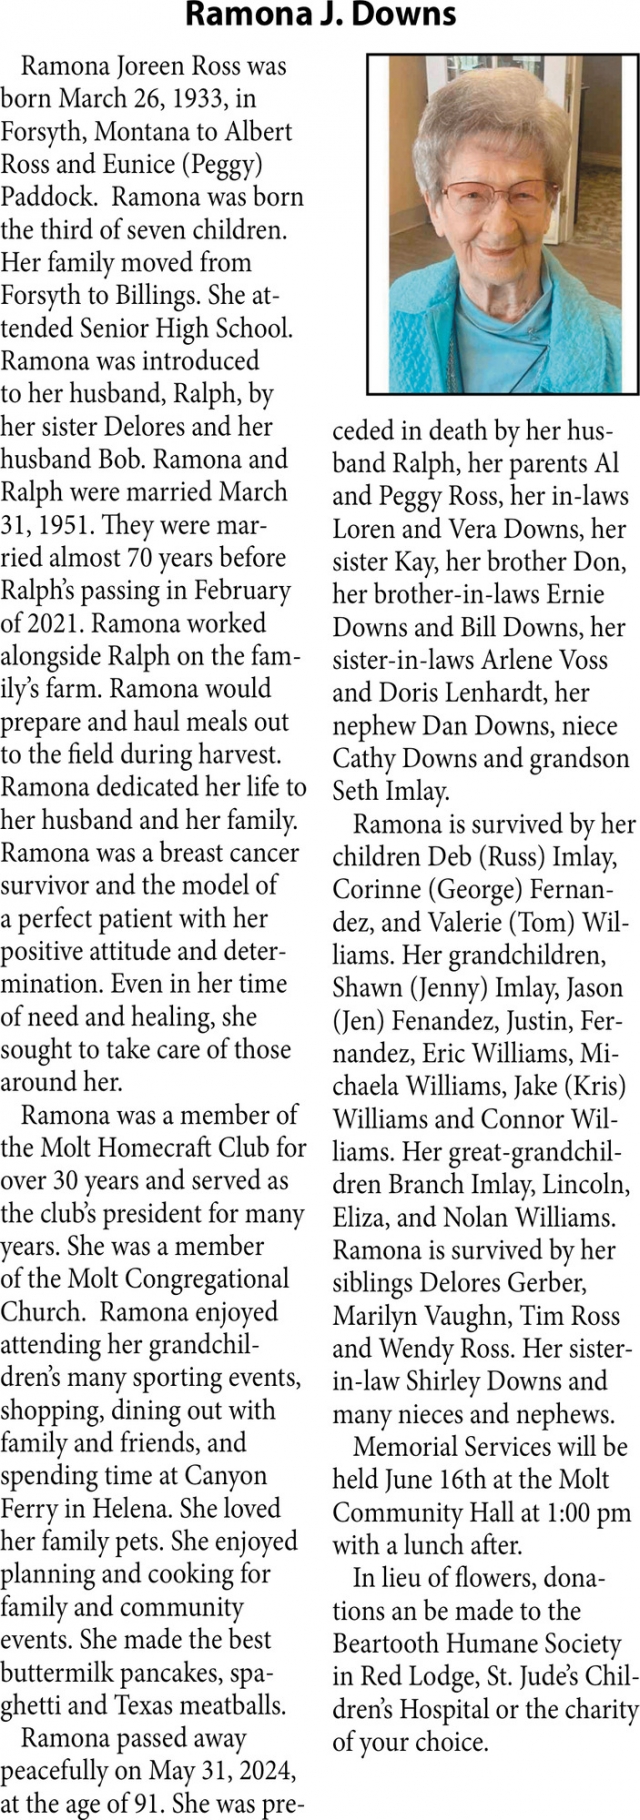 Ramona J. Downs, Obituaries, Glendive, MT